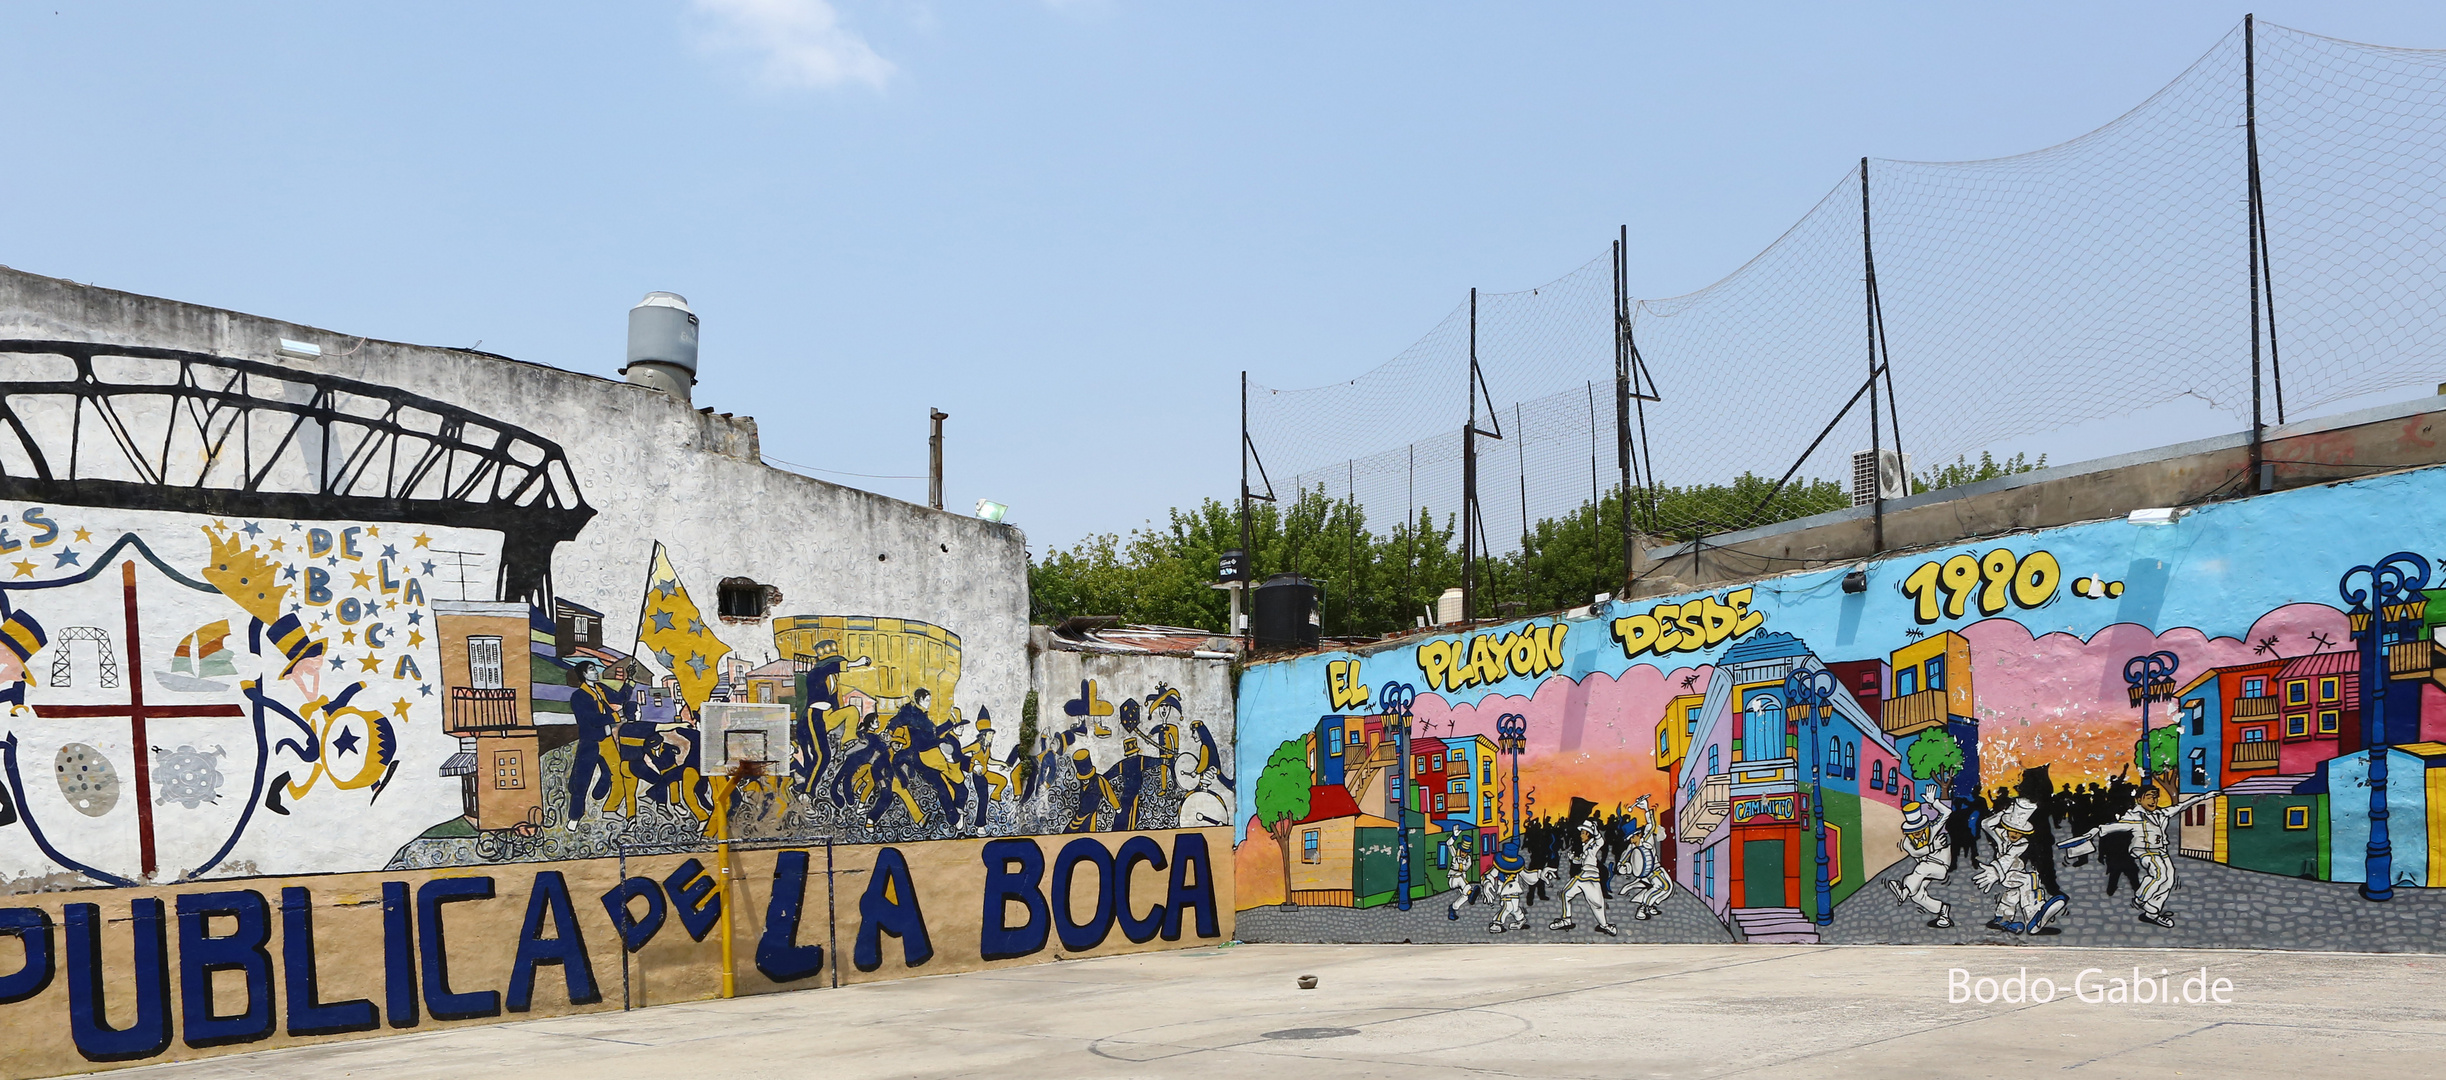 Fußballviertel La Boca